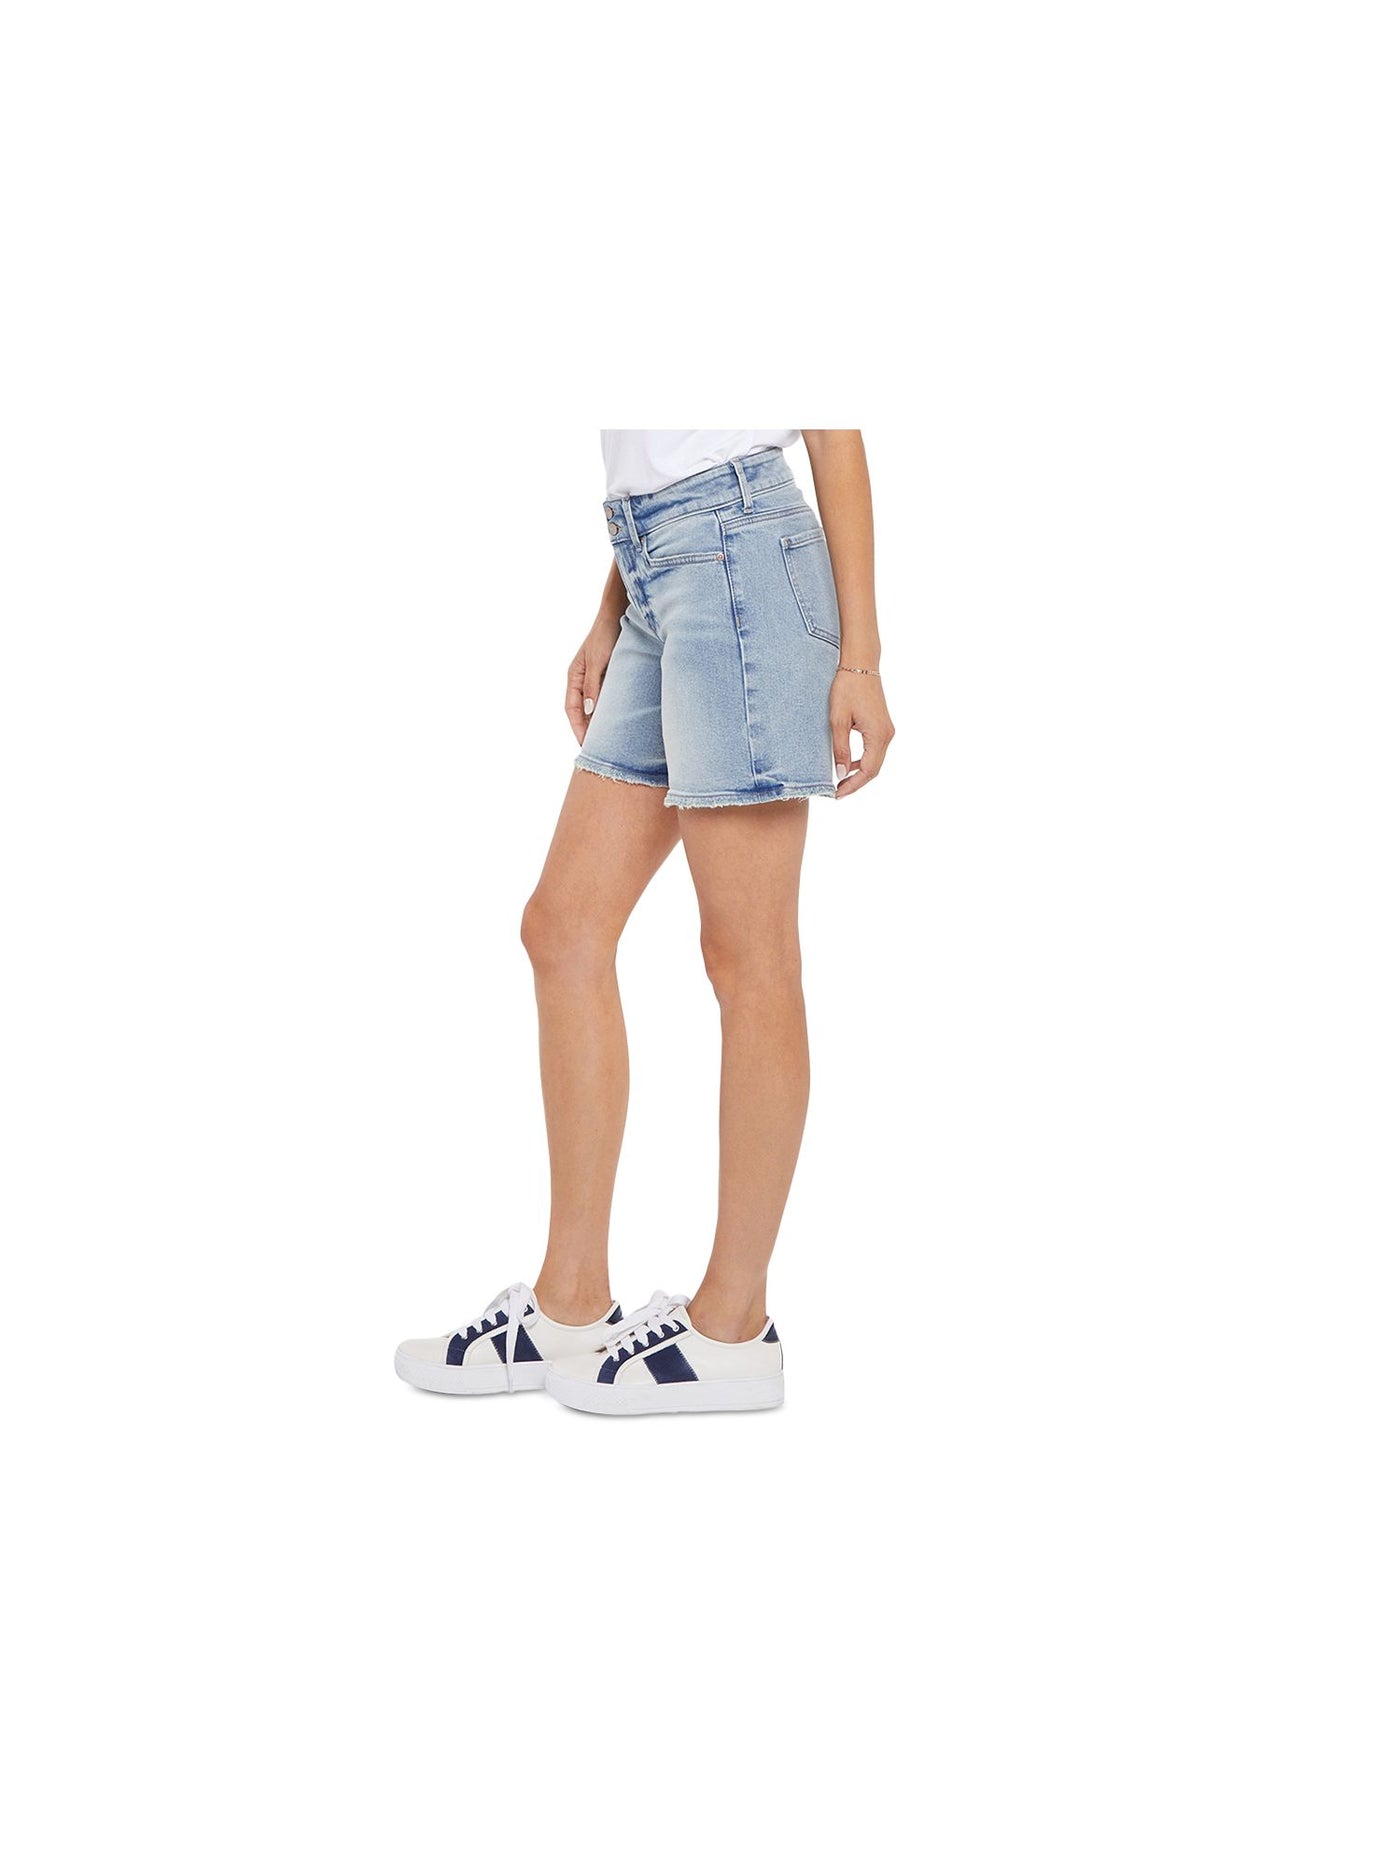 NYDJ Womens Light Blue Denim Pocketed Zippered 2 Button Closure Frayed Hem Shorts Shorts 16